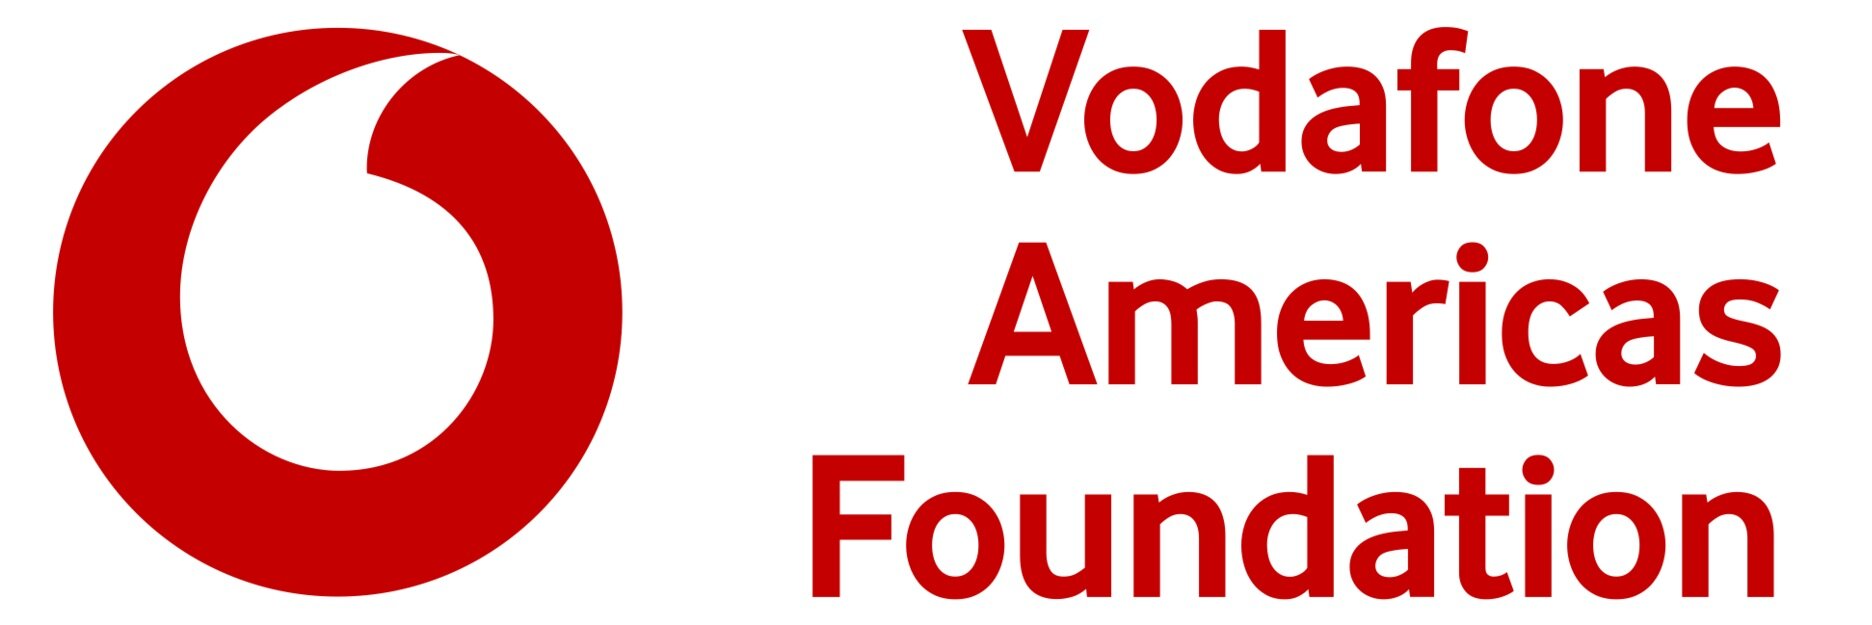 Vodafone Americas Foundation Logo